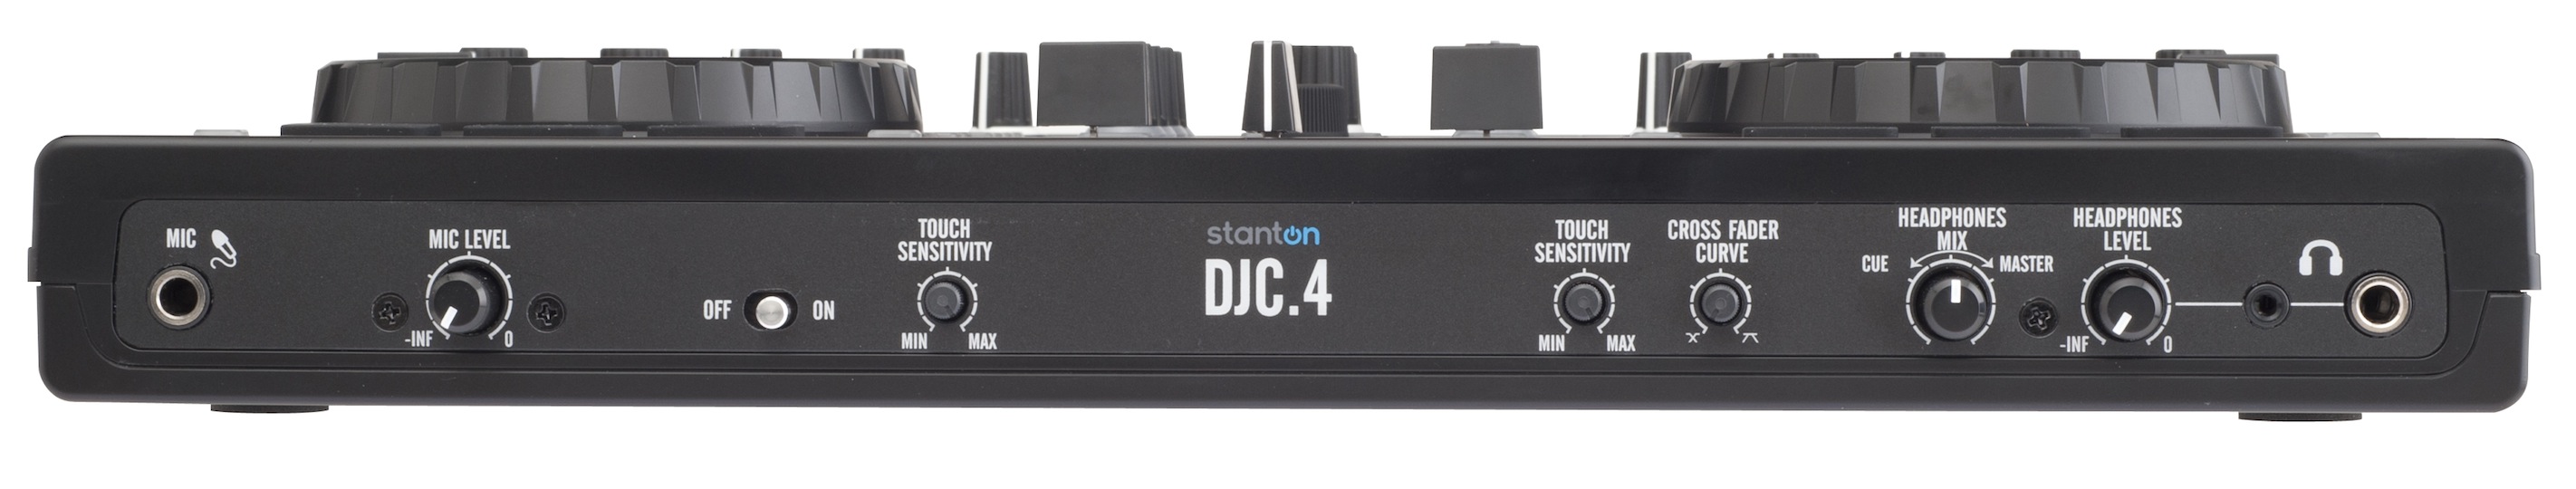 Stanton DJC.4 alt2